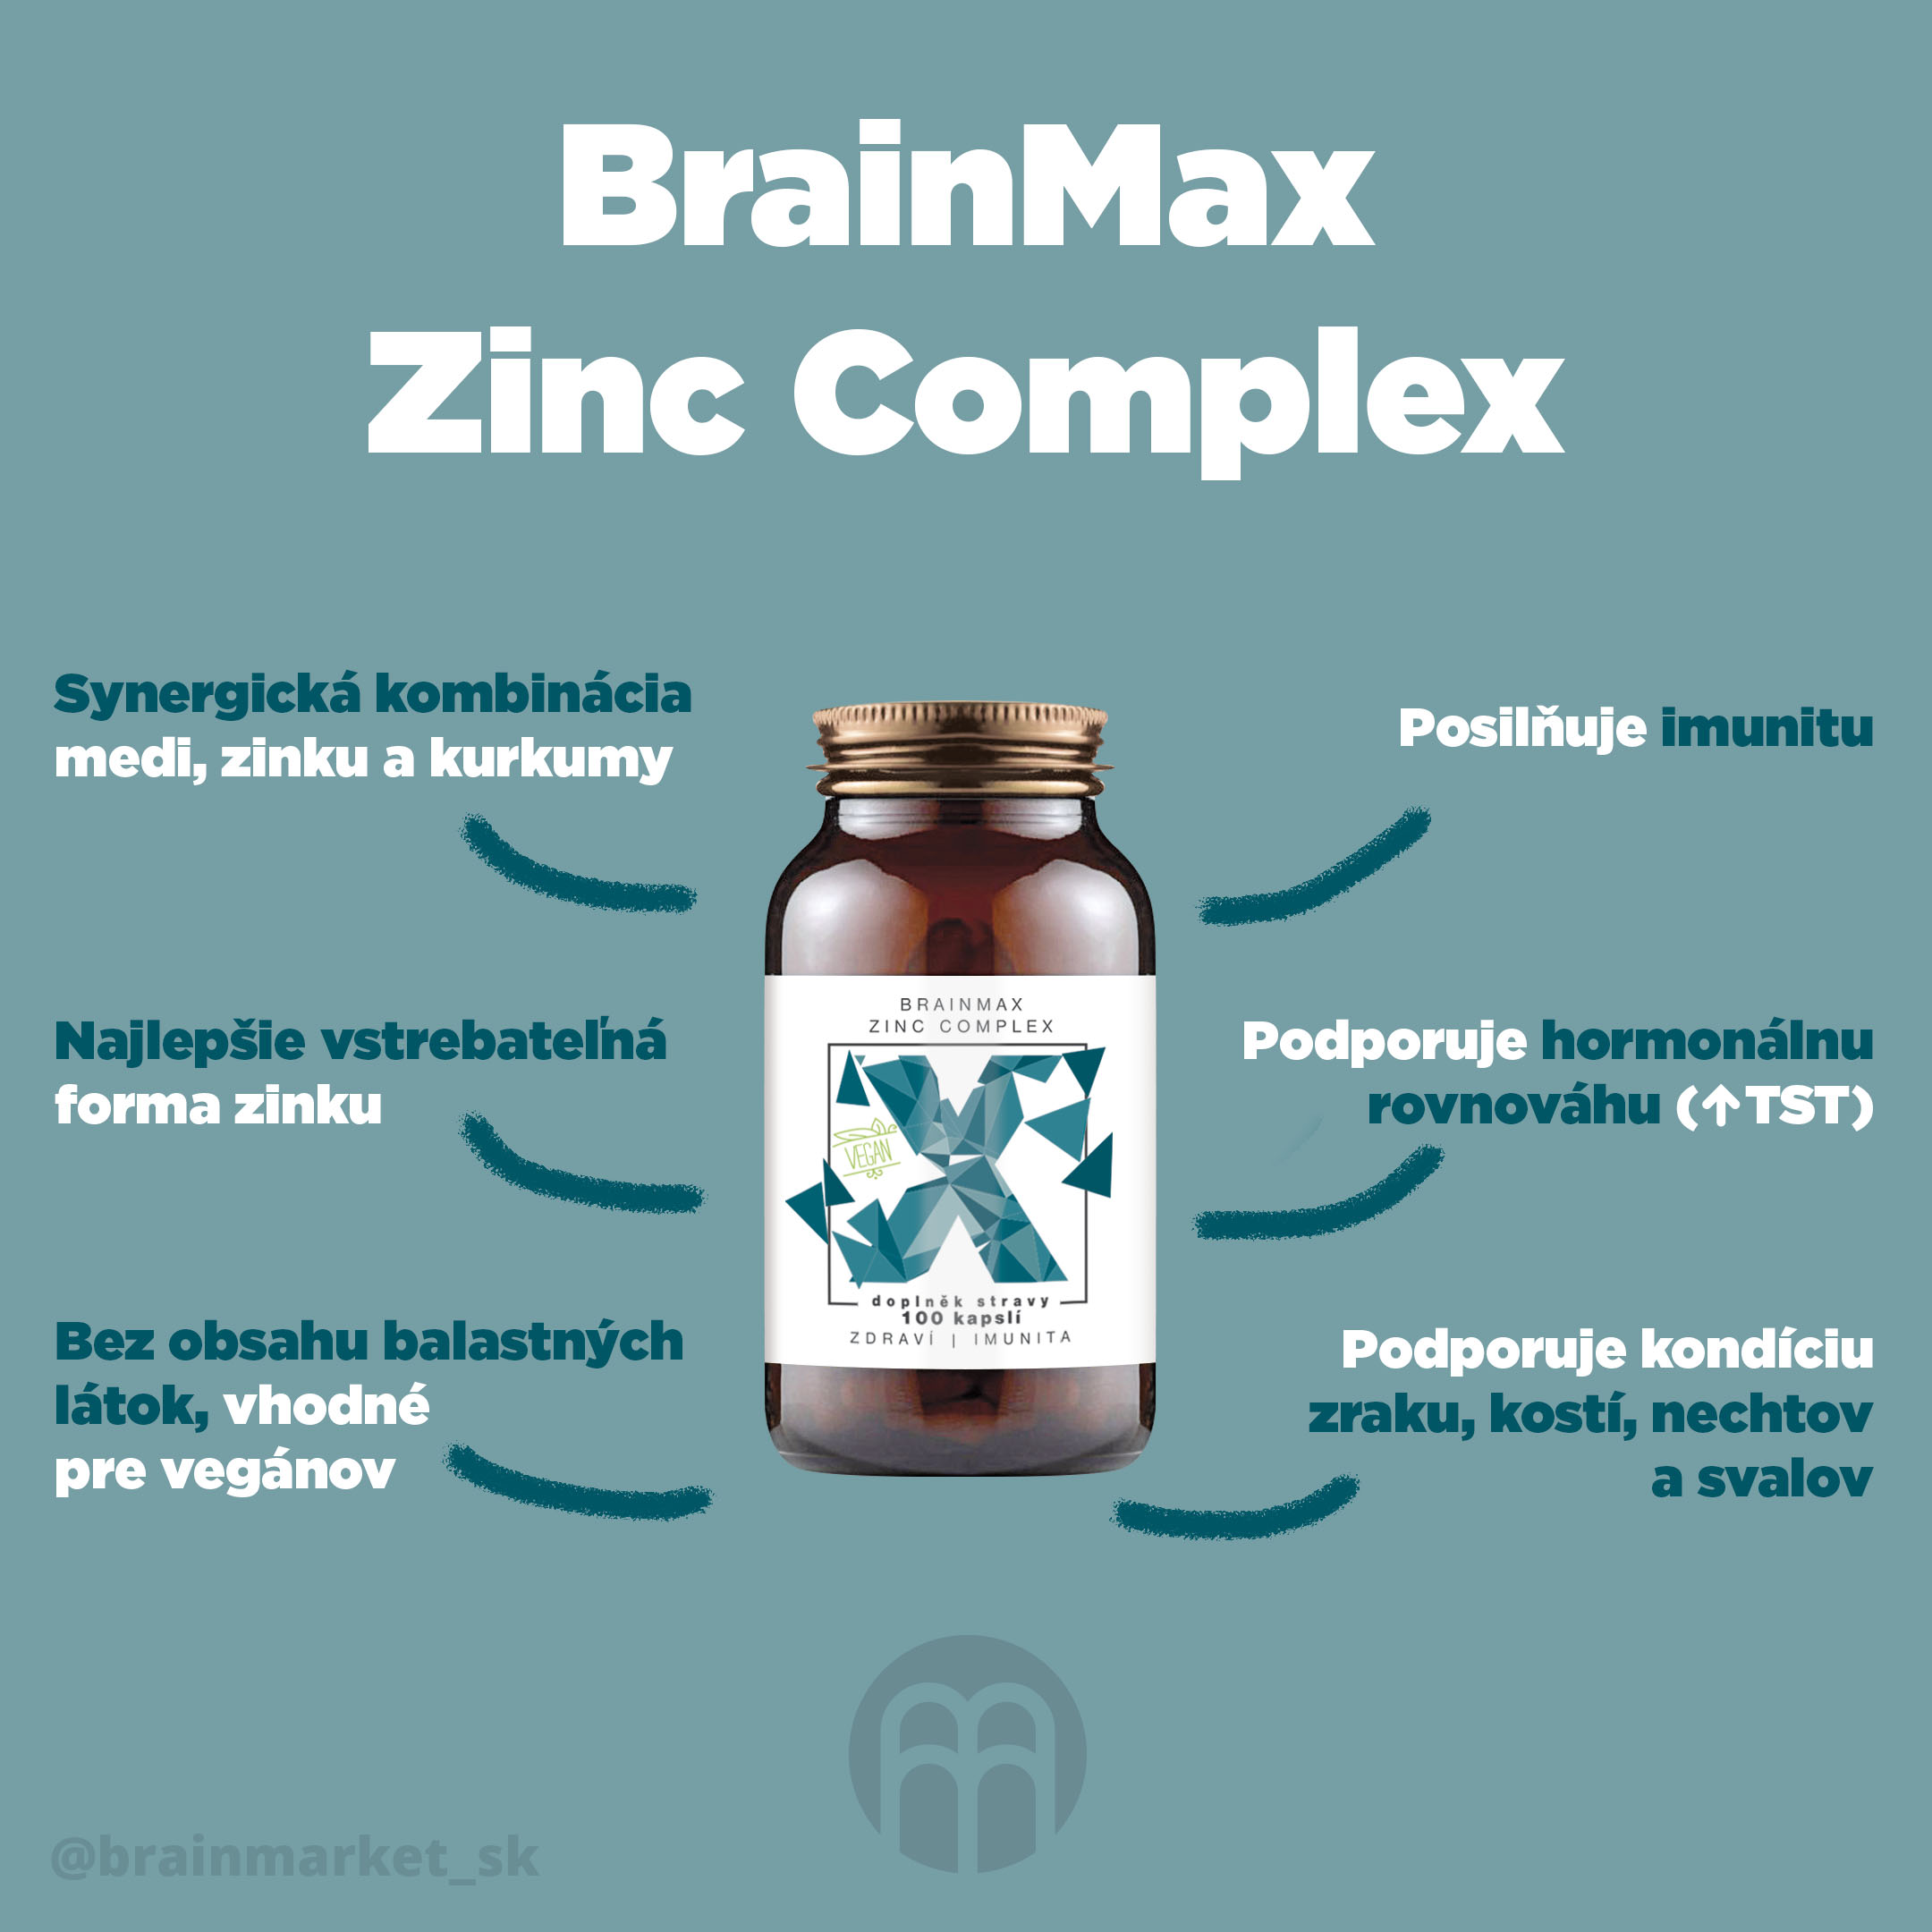 brainmax_zinc_complex_ucinky_Infografika-BrainMarket-2_SK